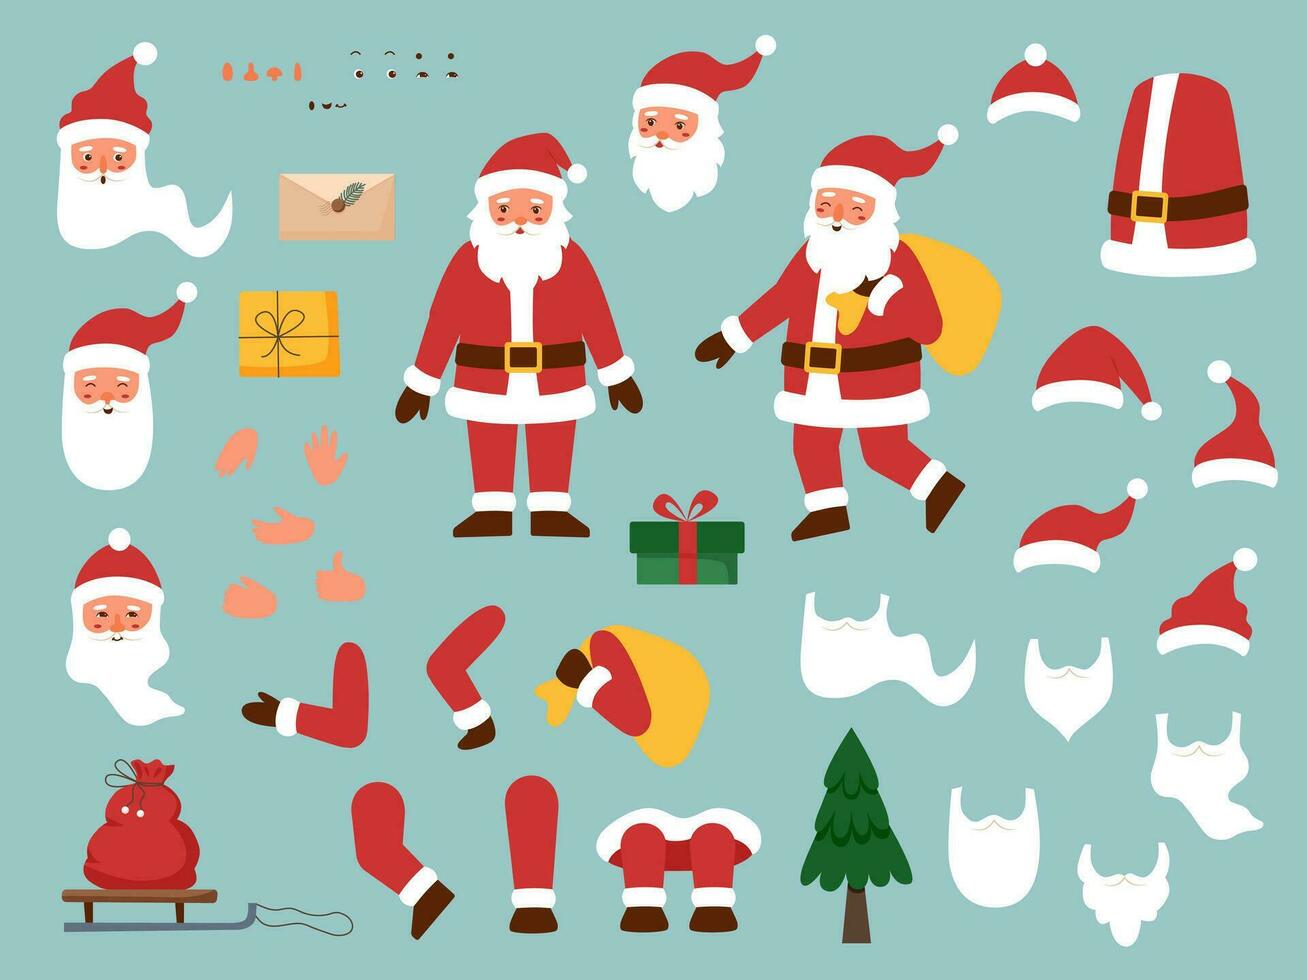 Santa Claus character constructor vector